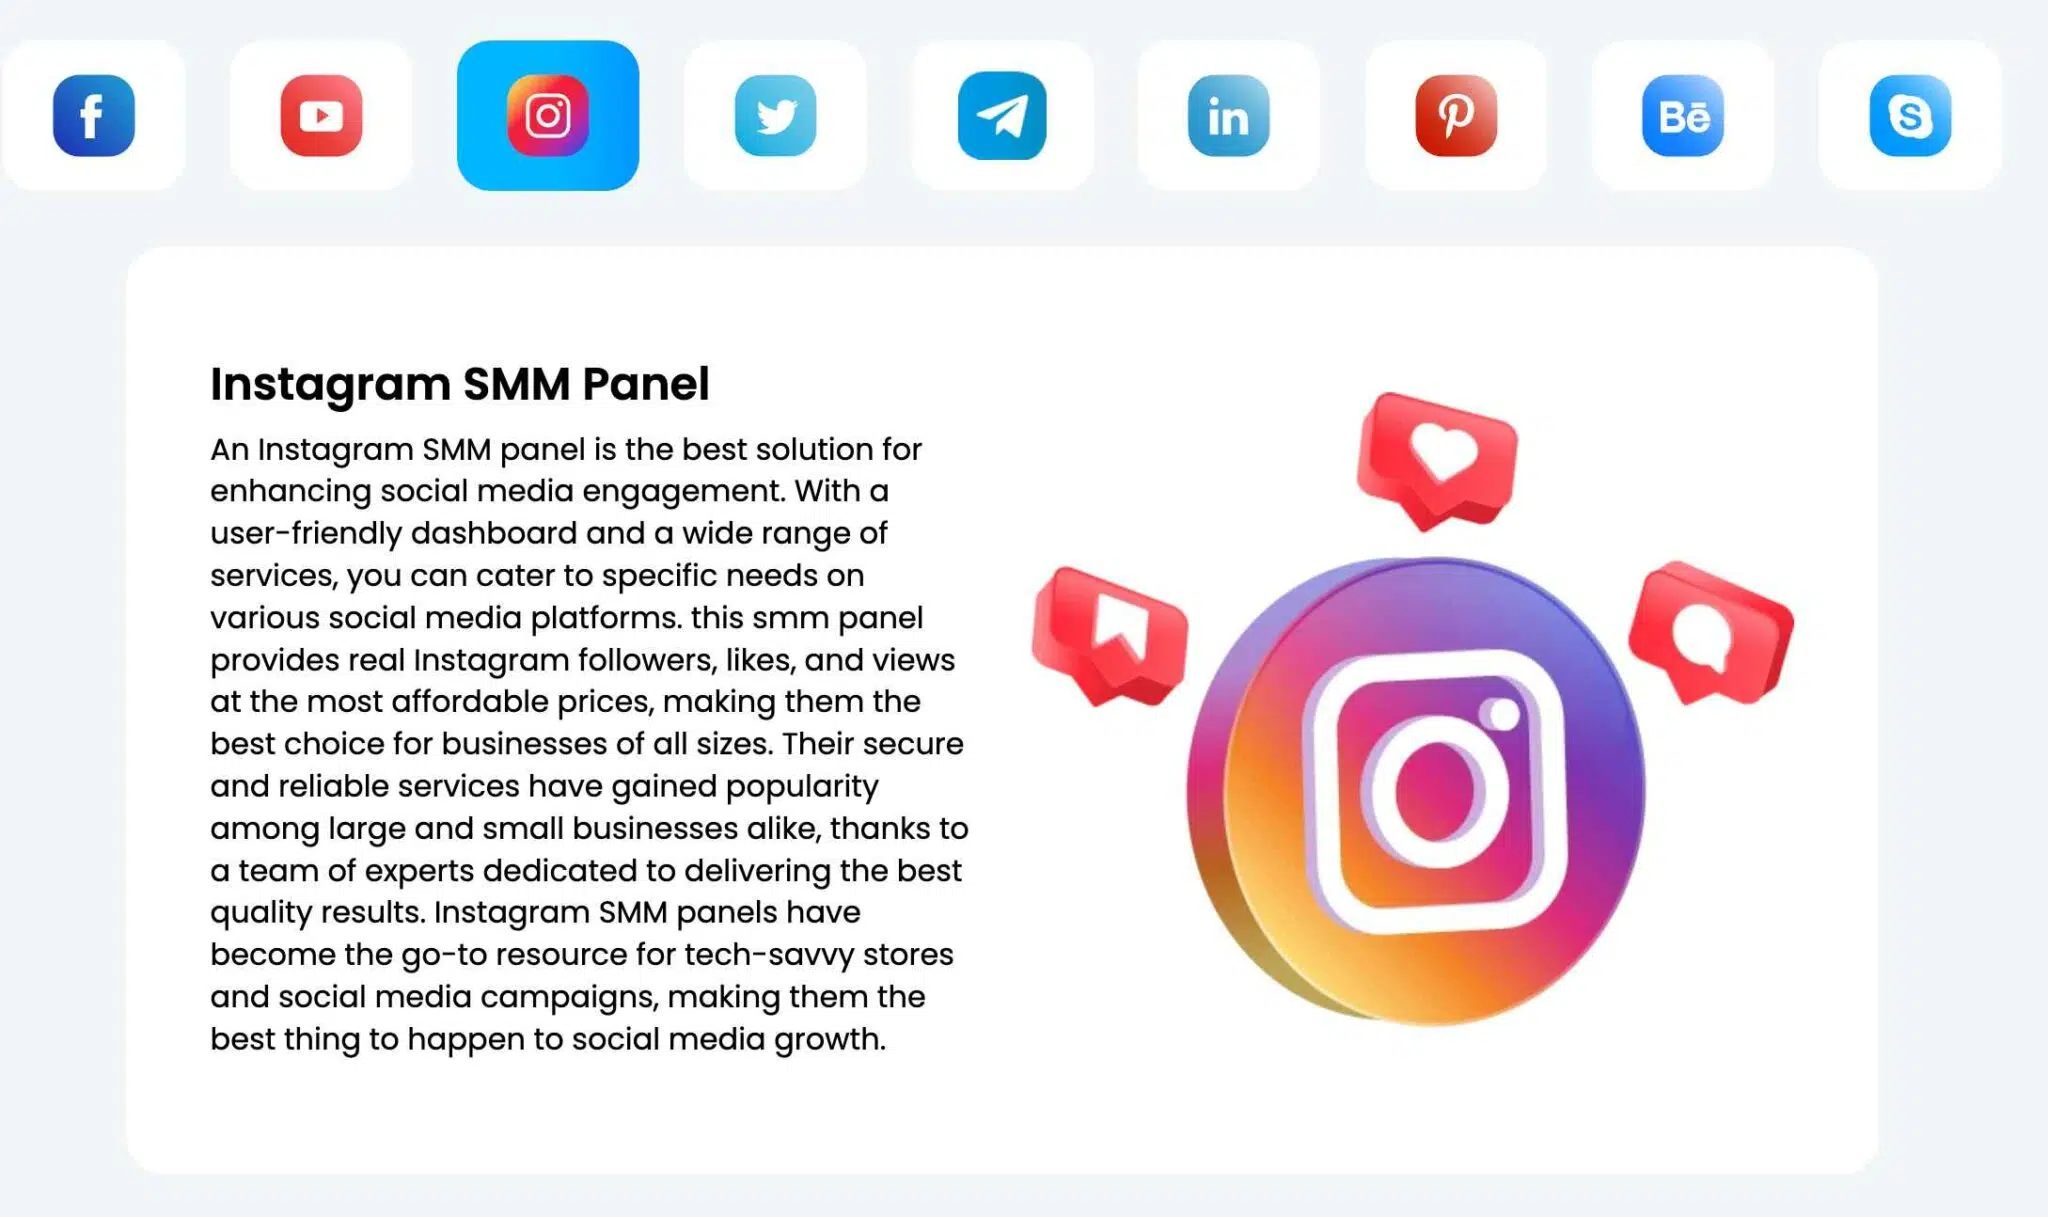 Instagram SMM panel